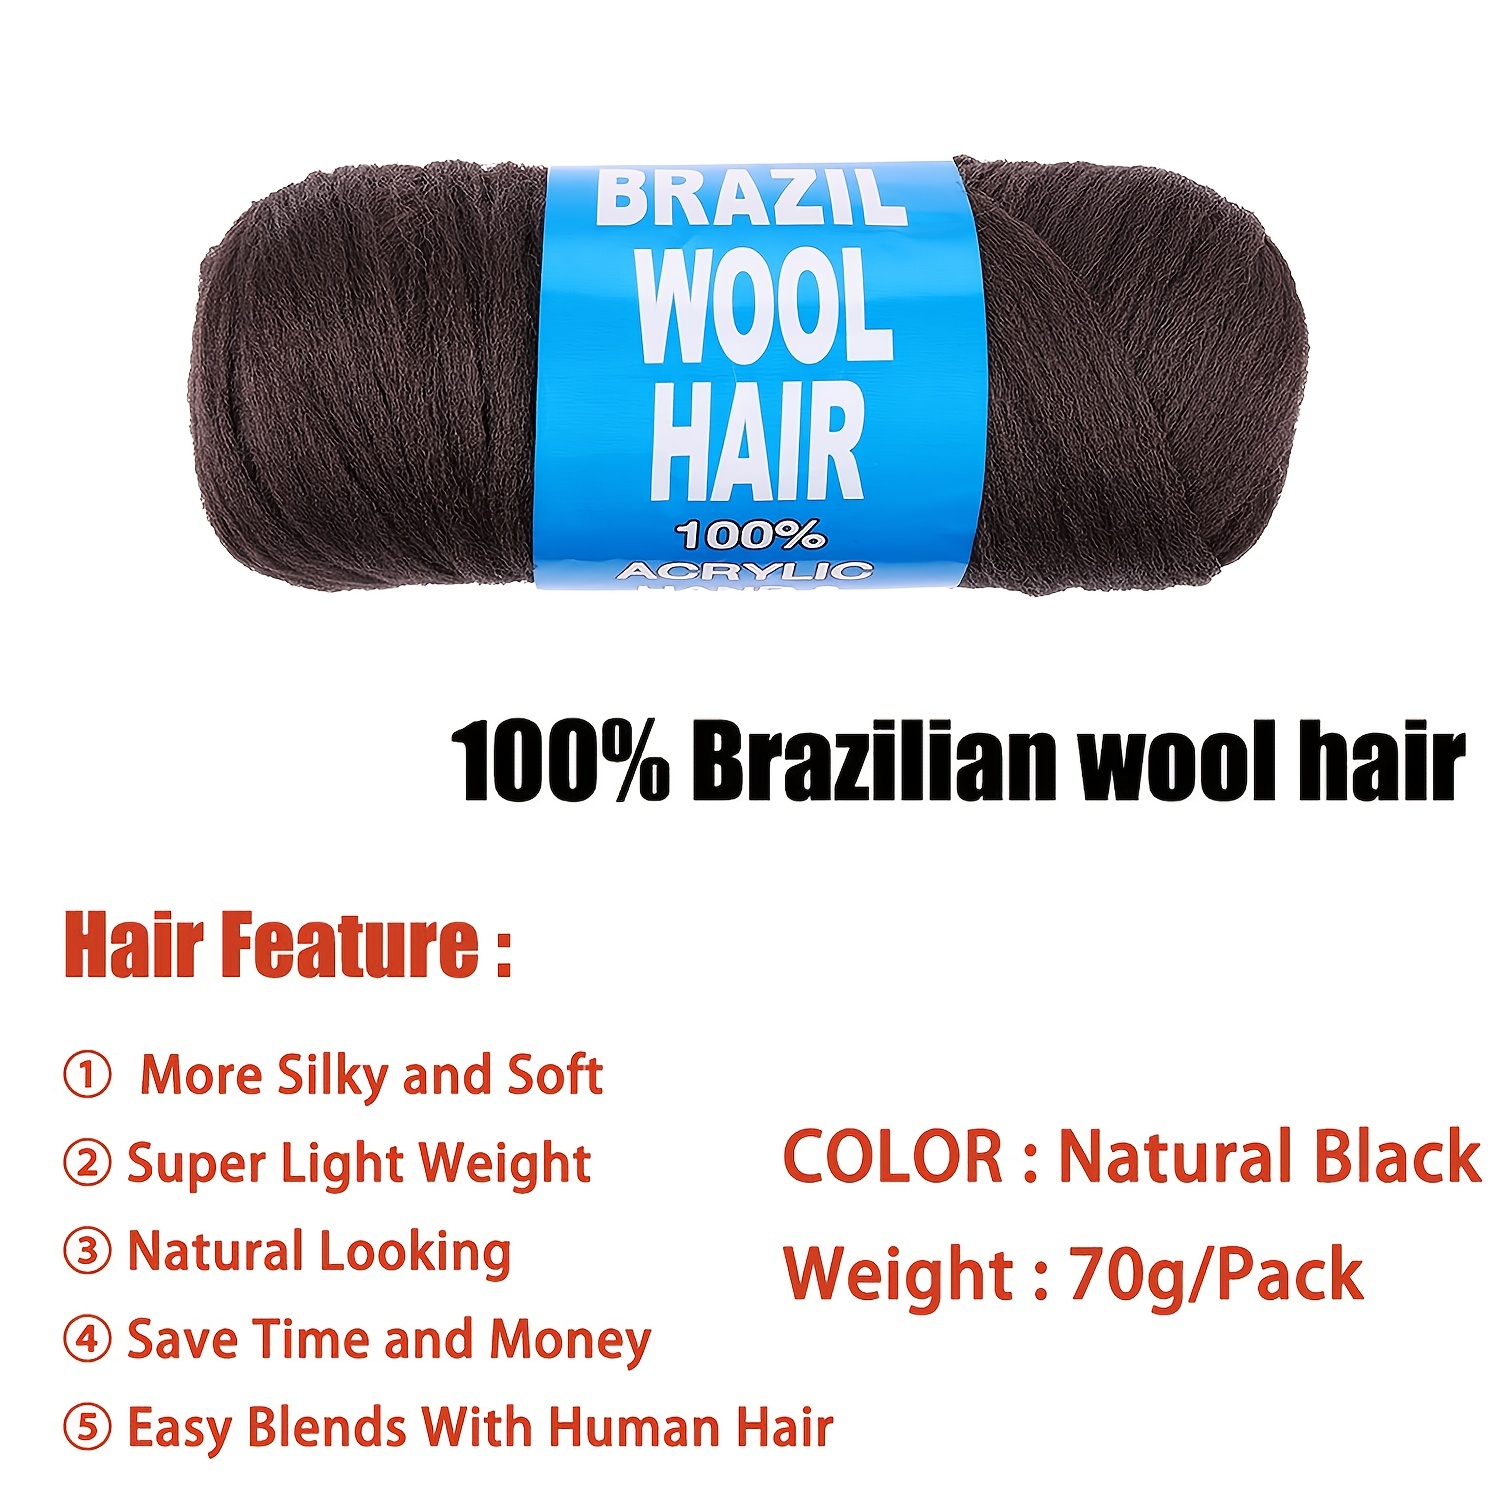 4Pcs Dark Grey Brazilian Wool Hair for Braids Acrylic Hand Knitting Yarn  for Hair Braiding Hair Extension Faux Locs African Crochet Braid(#Grey)